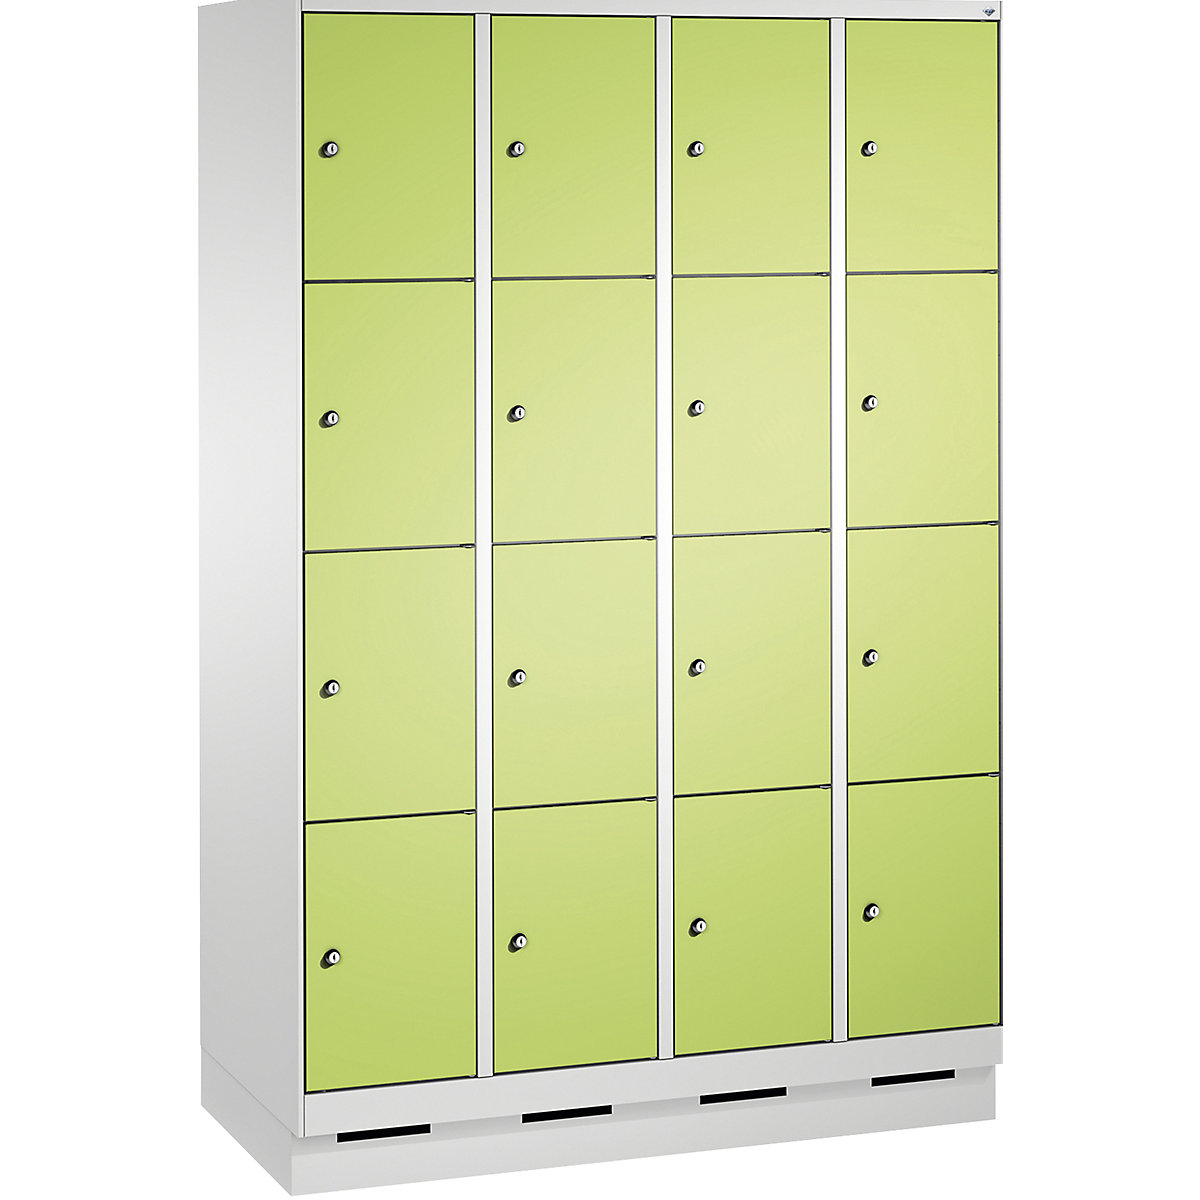 EVOLO locker unit, with plinth – C+P, 4 compartments, 4 shelf compartments each, compartment width 300 mm, light grey / viridian green